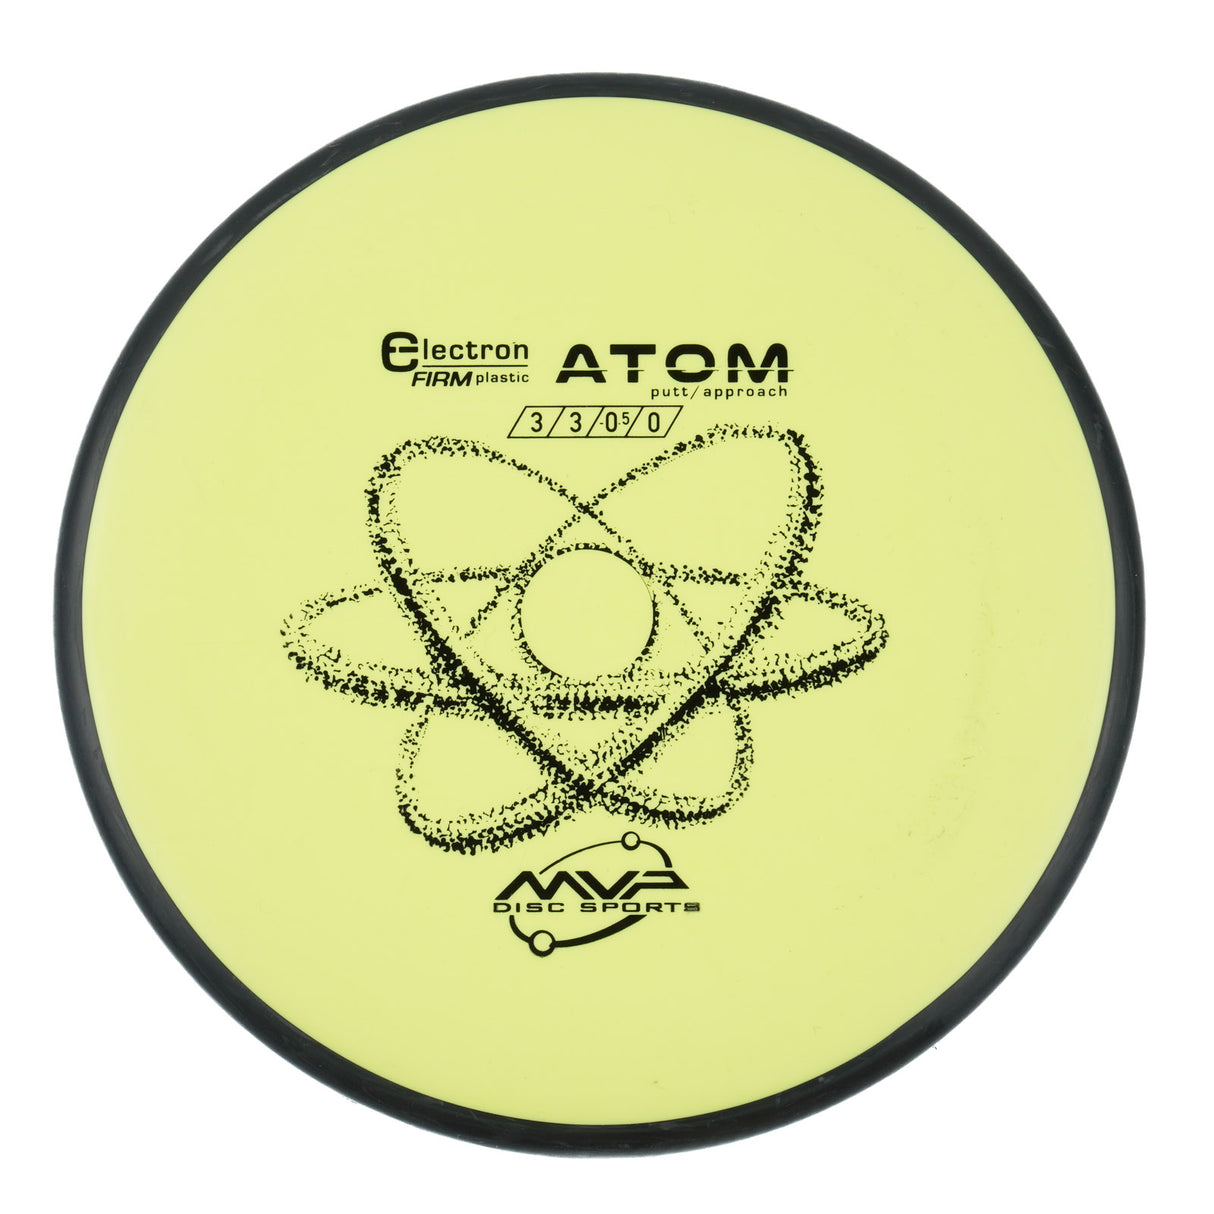 MVP Atom - Electron Firm 174g | Style 0001